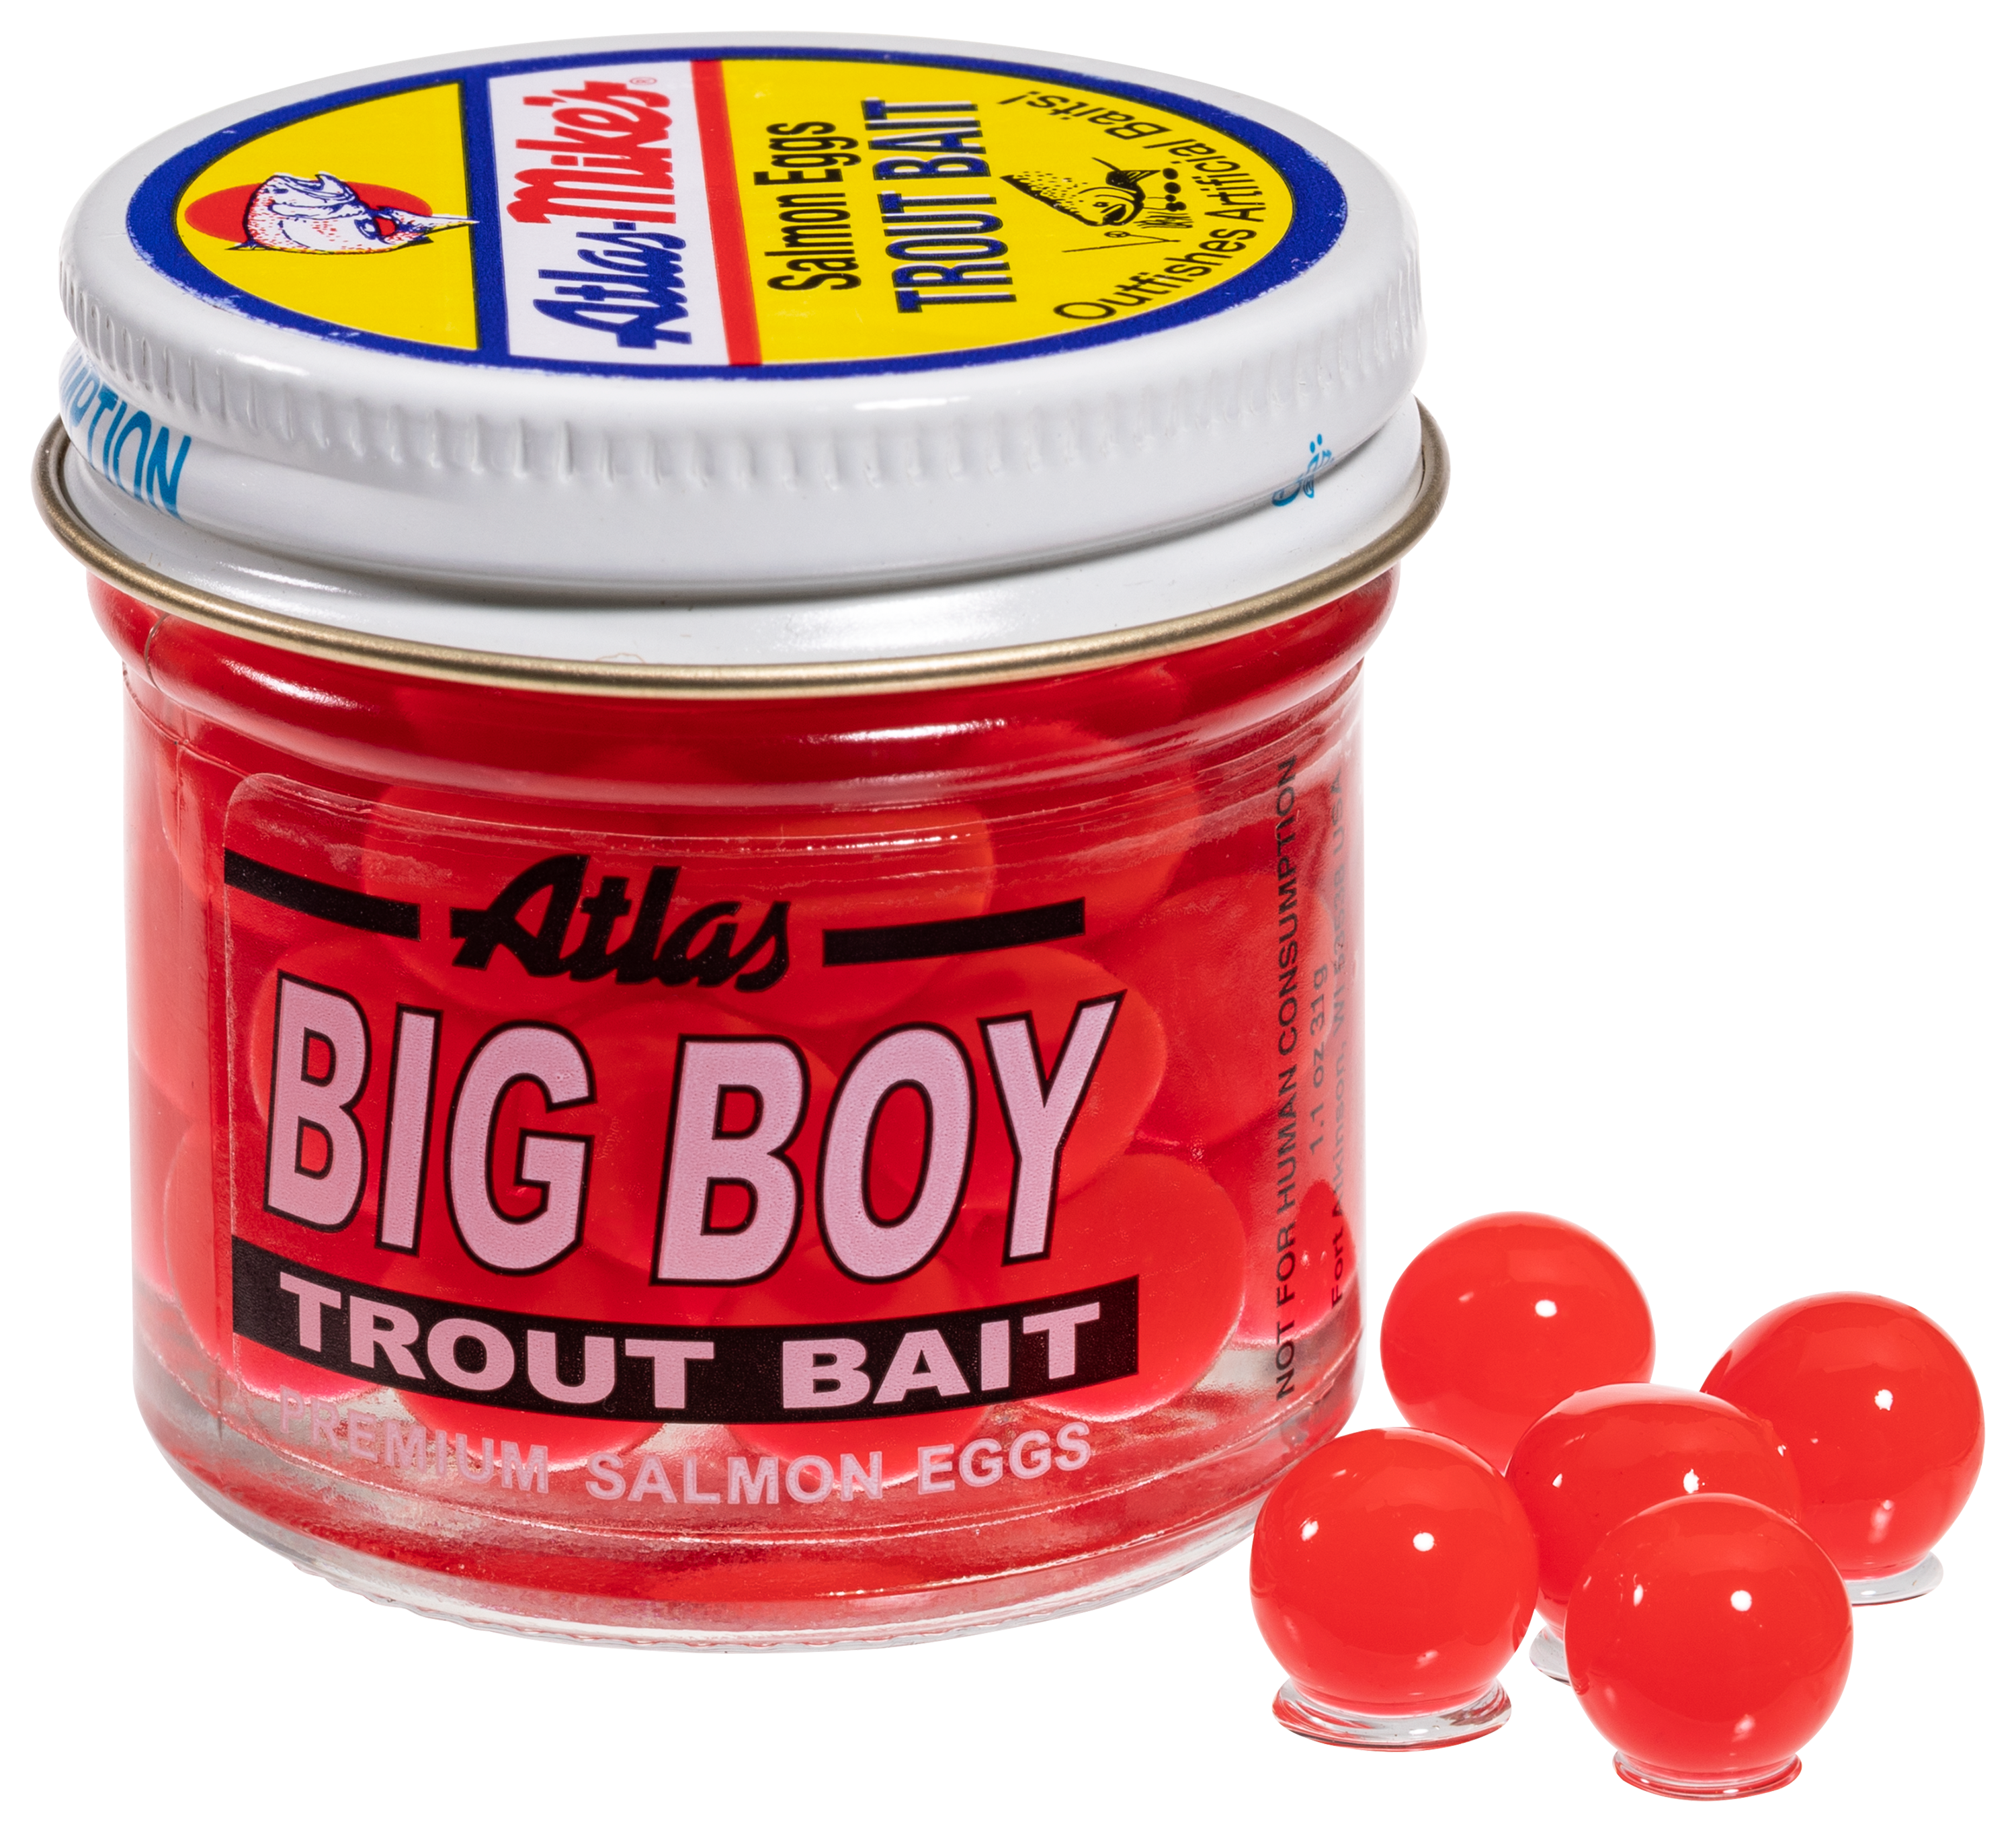 Atlas Big Boy Salmon Eggs Red